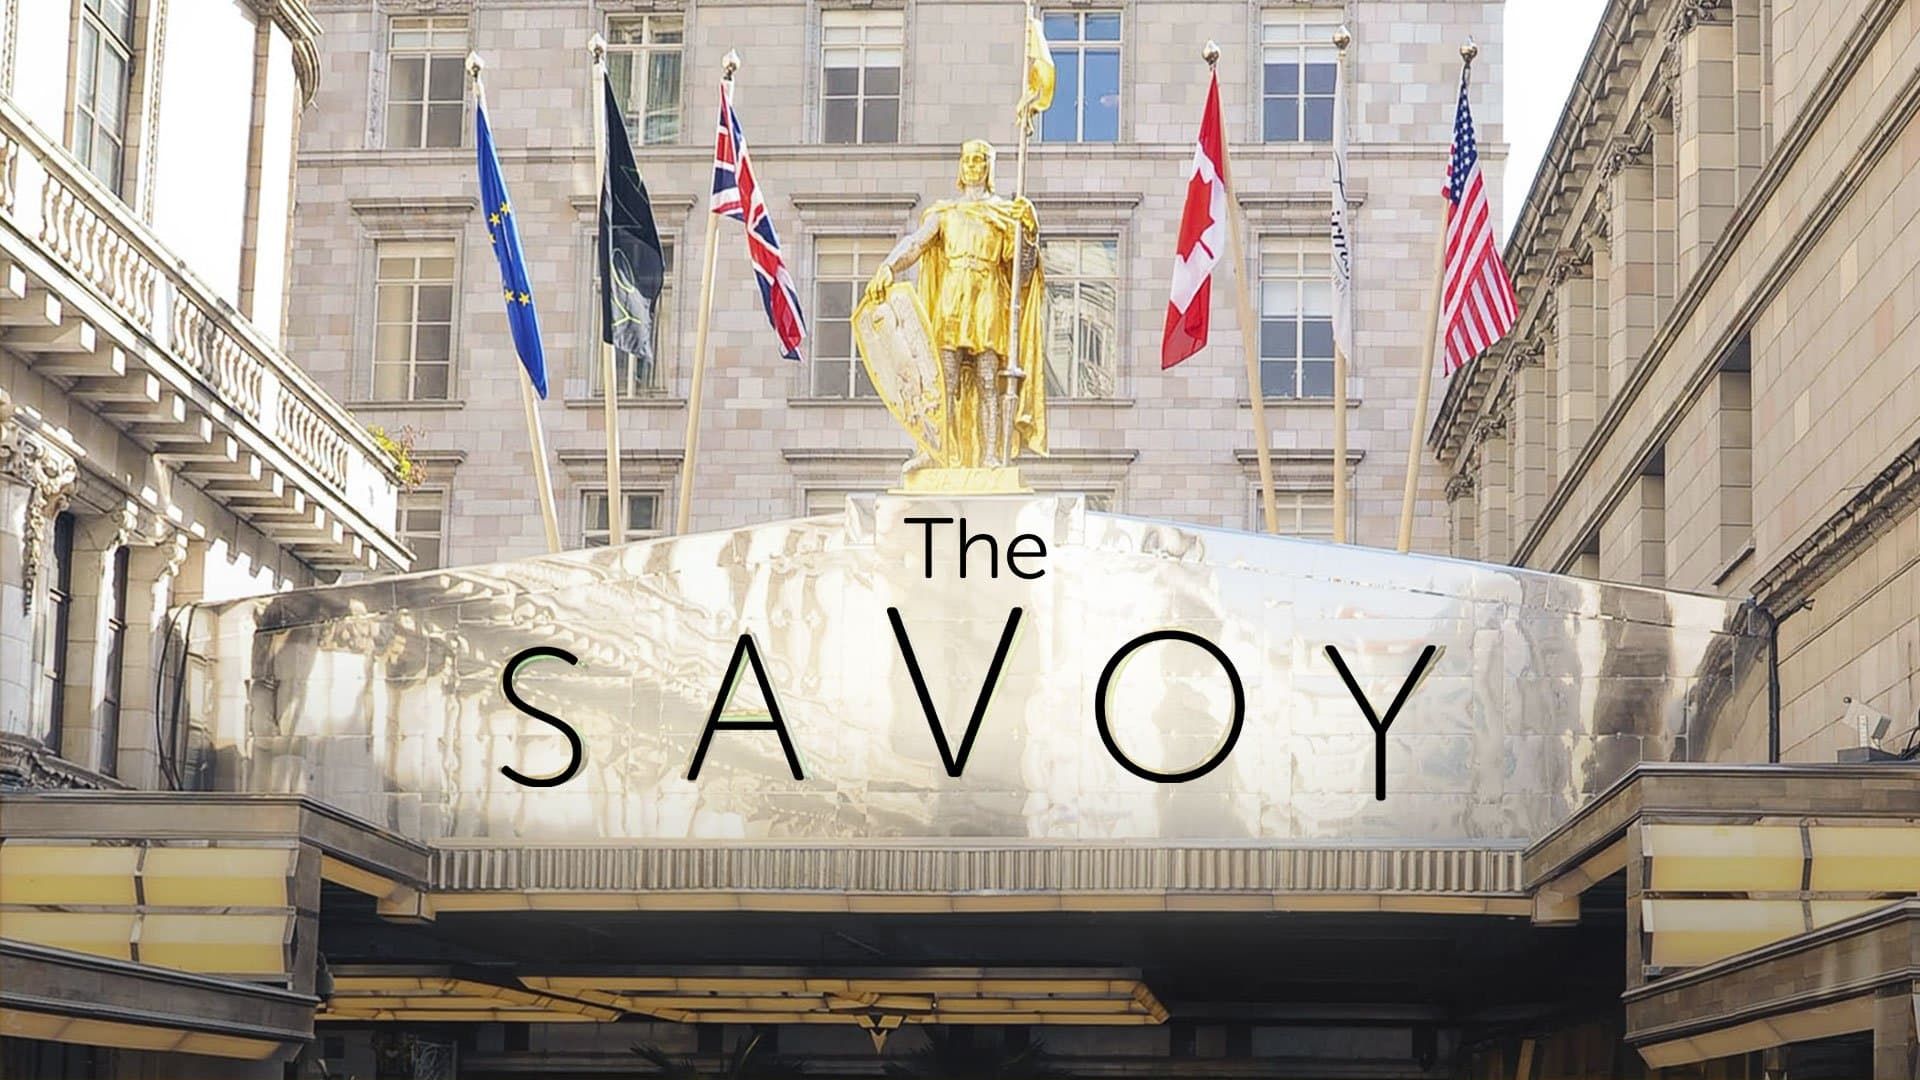 The Savoy background